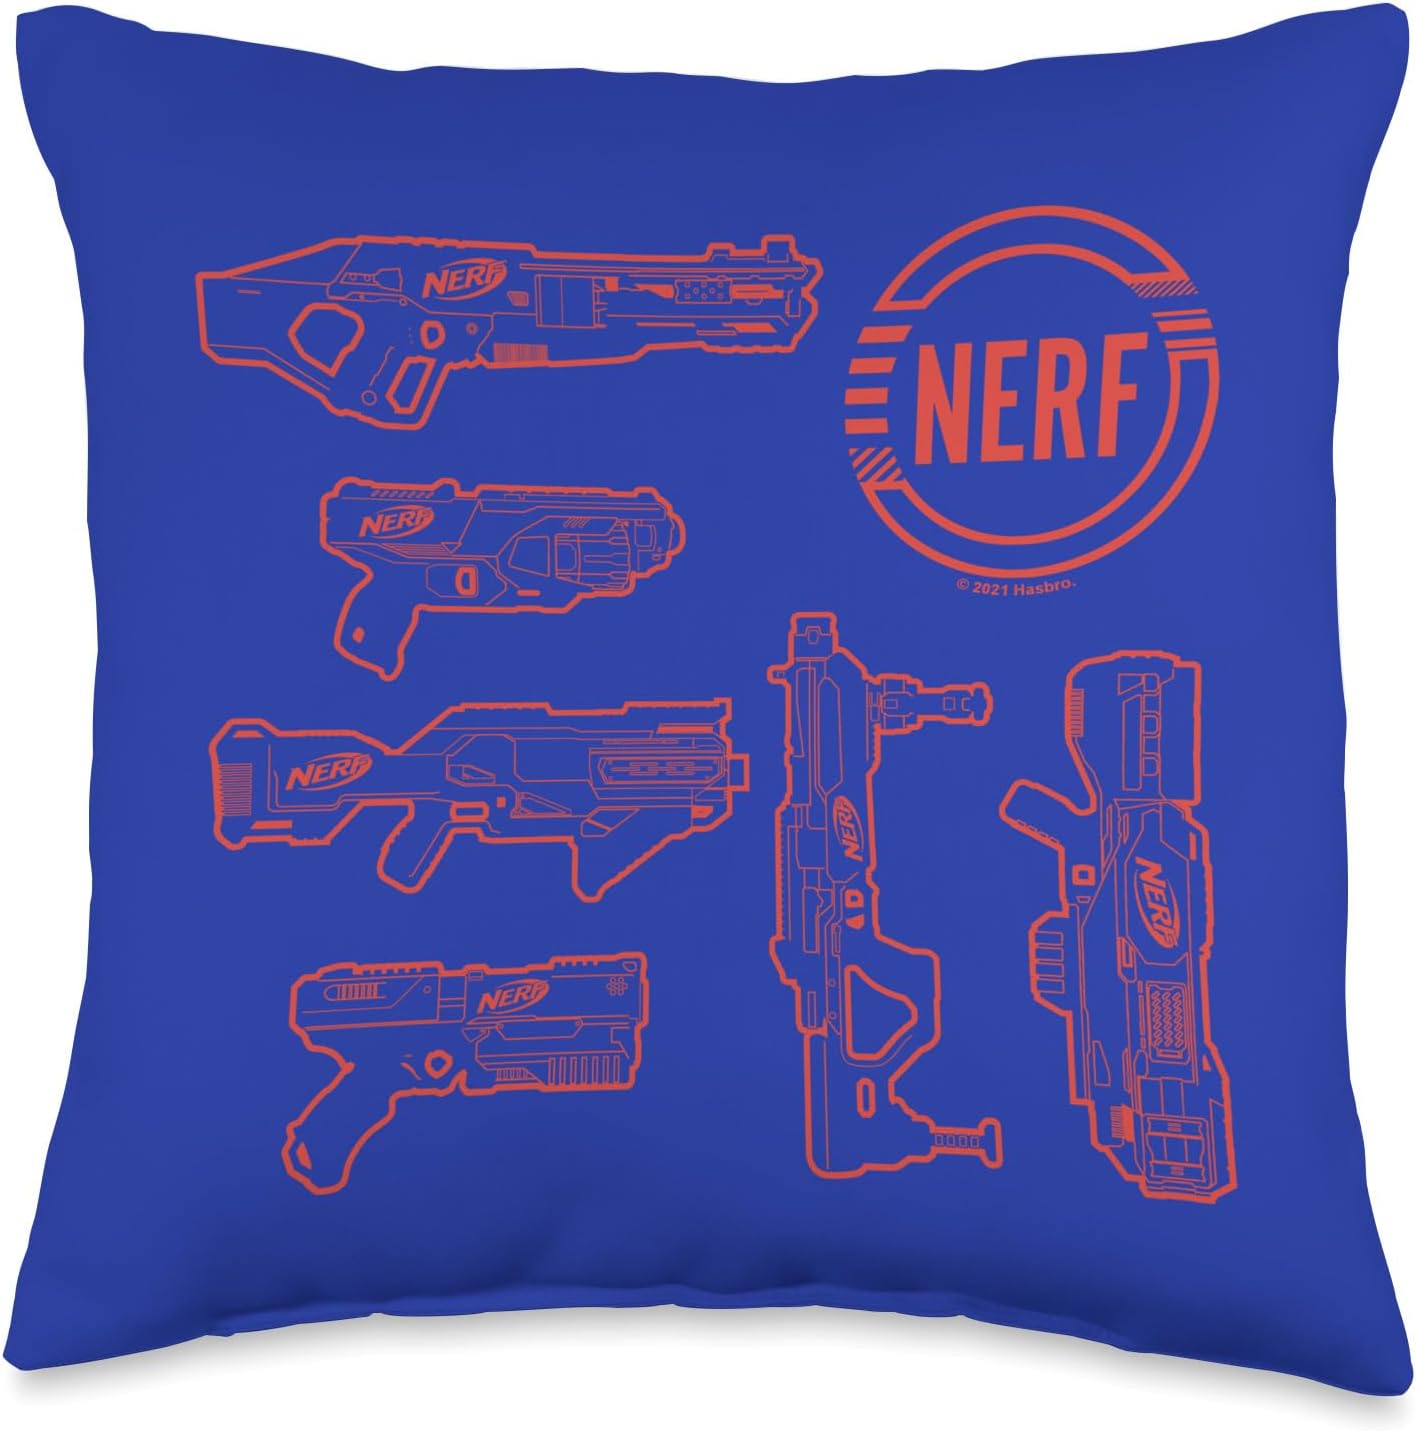 Nerf The Blaster Chart Throw Pillow